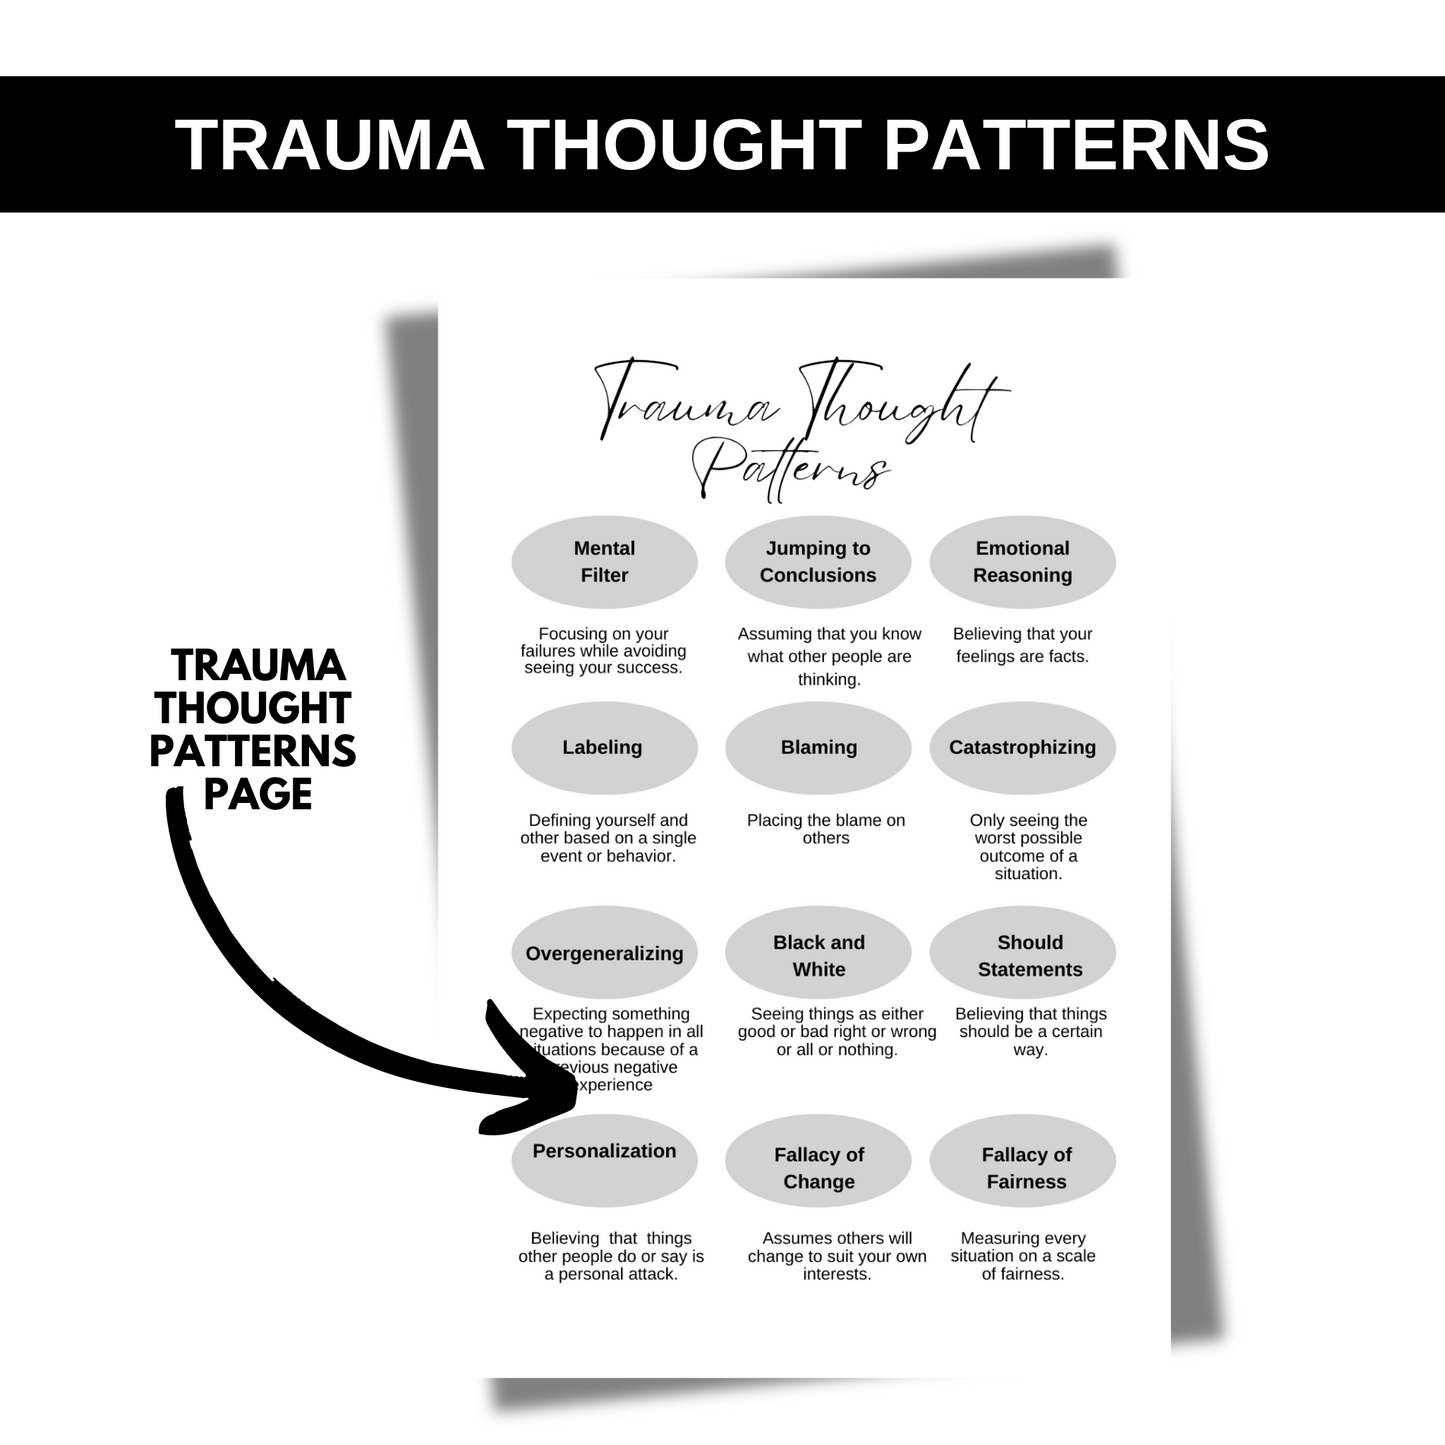 Braving the Storm of Trauma